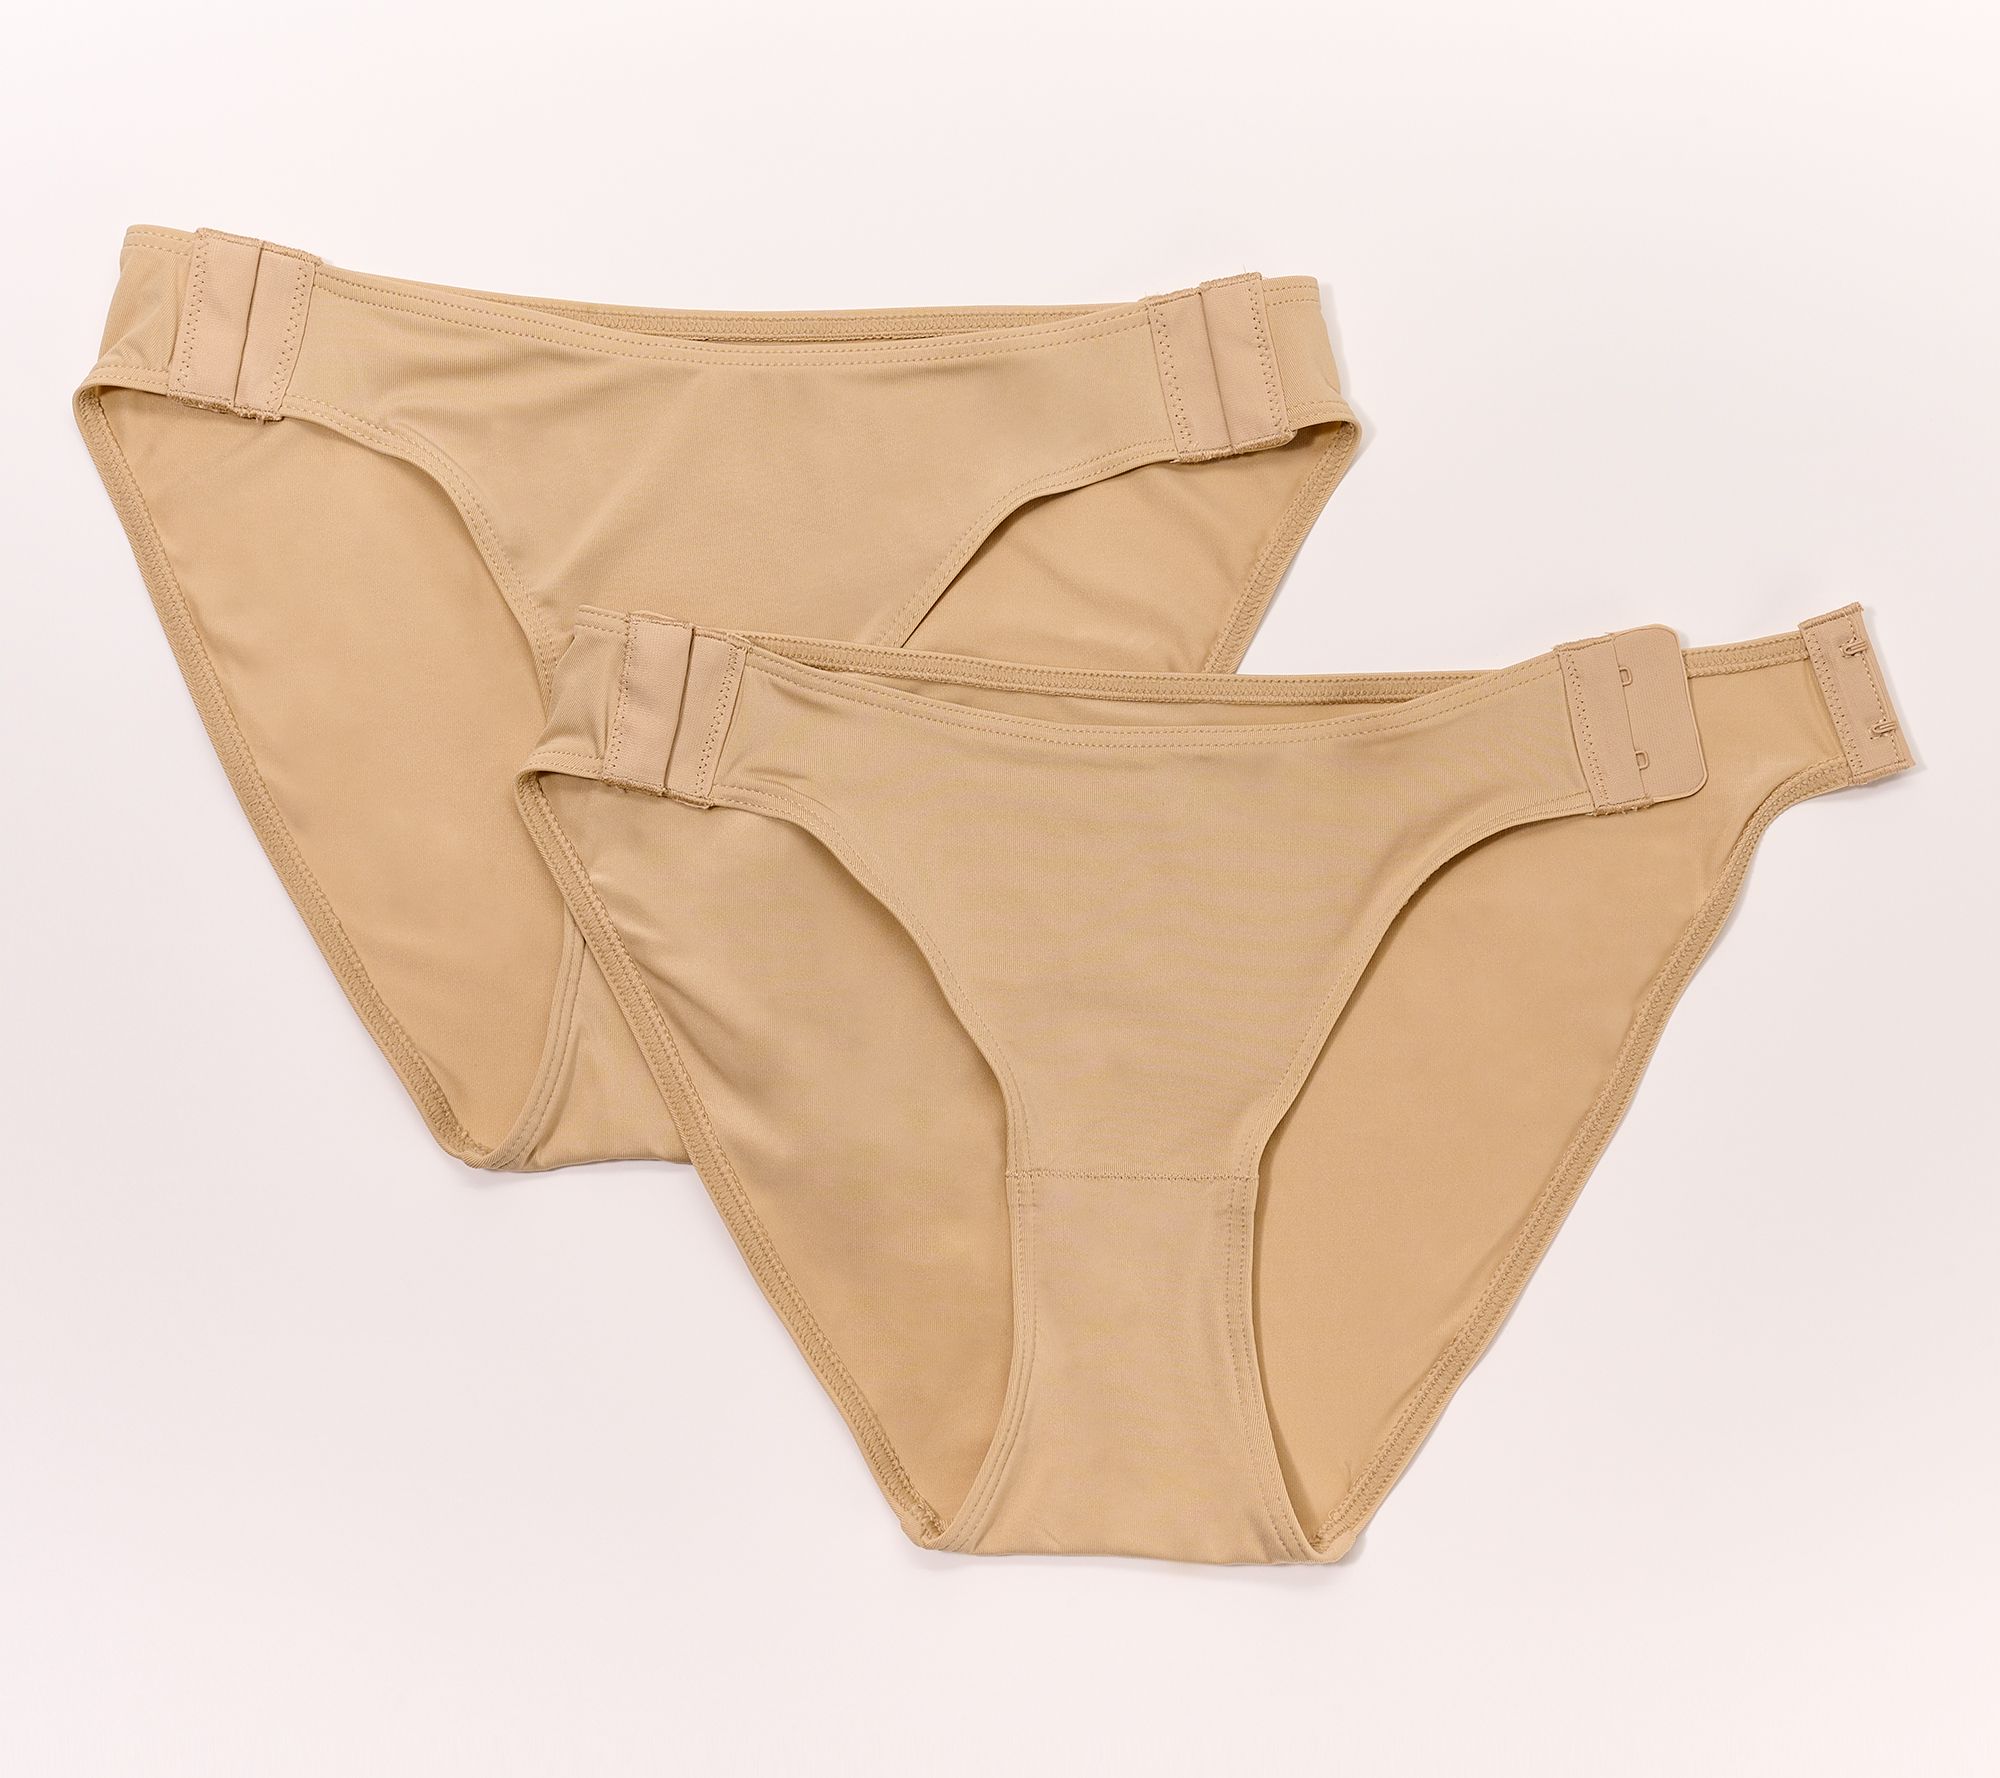 Slick Chicks Adaptive Underwear with VELCRO® Brand Fastener